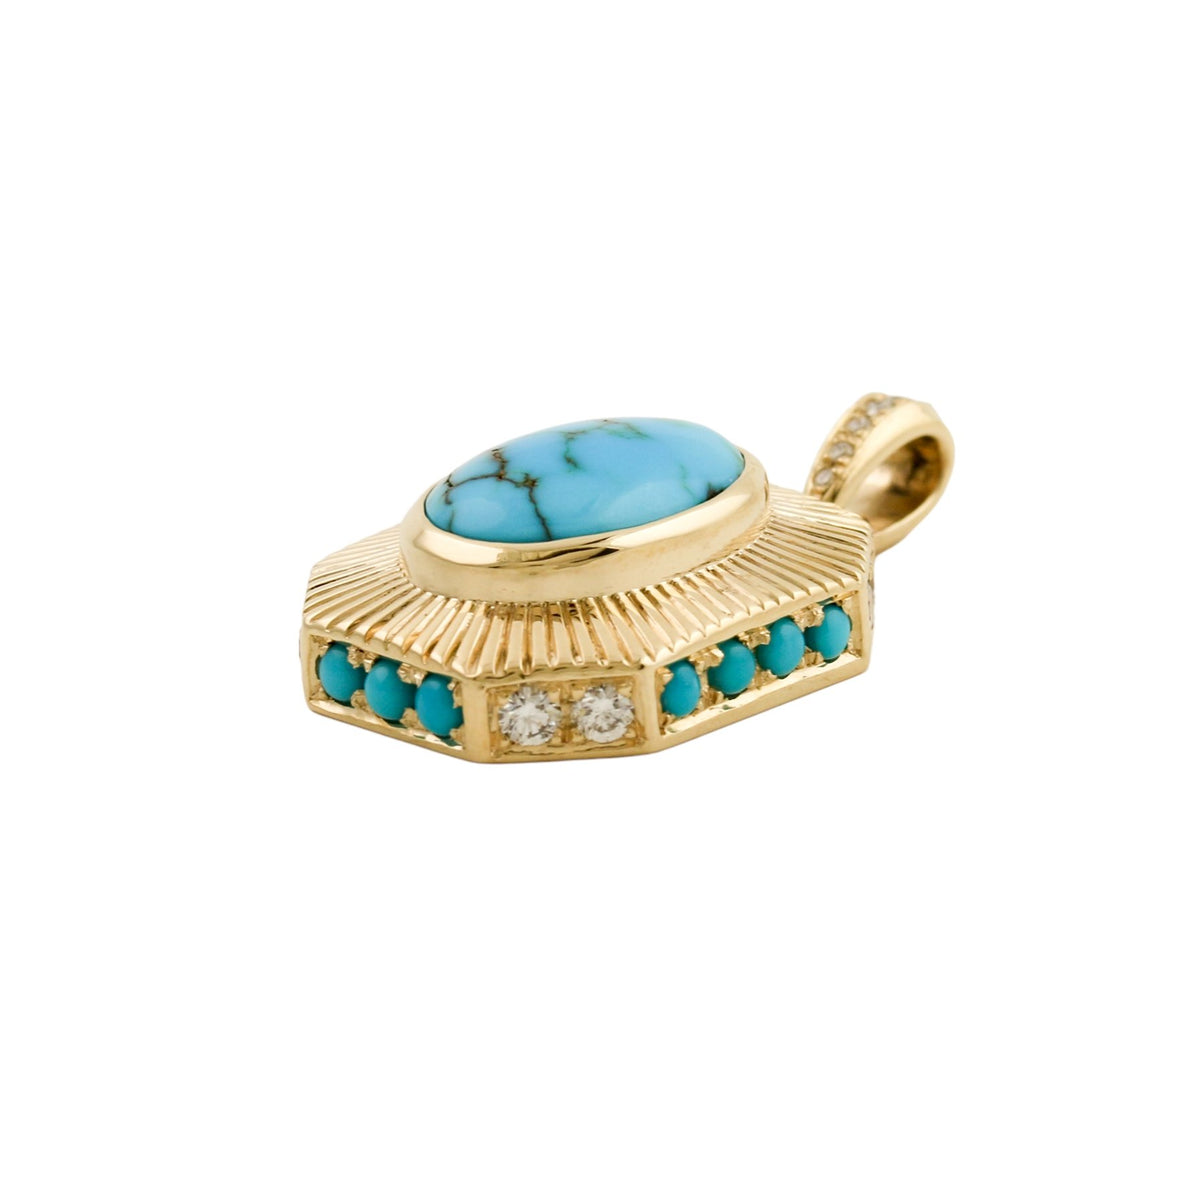 Gold "Empire" Pendant x Egyptian Turquoise by Kingdom - Kingdom Jewelry